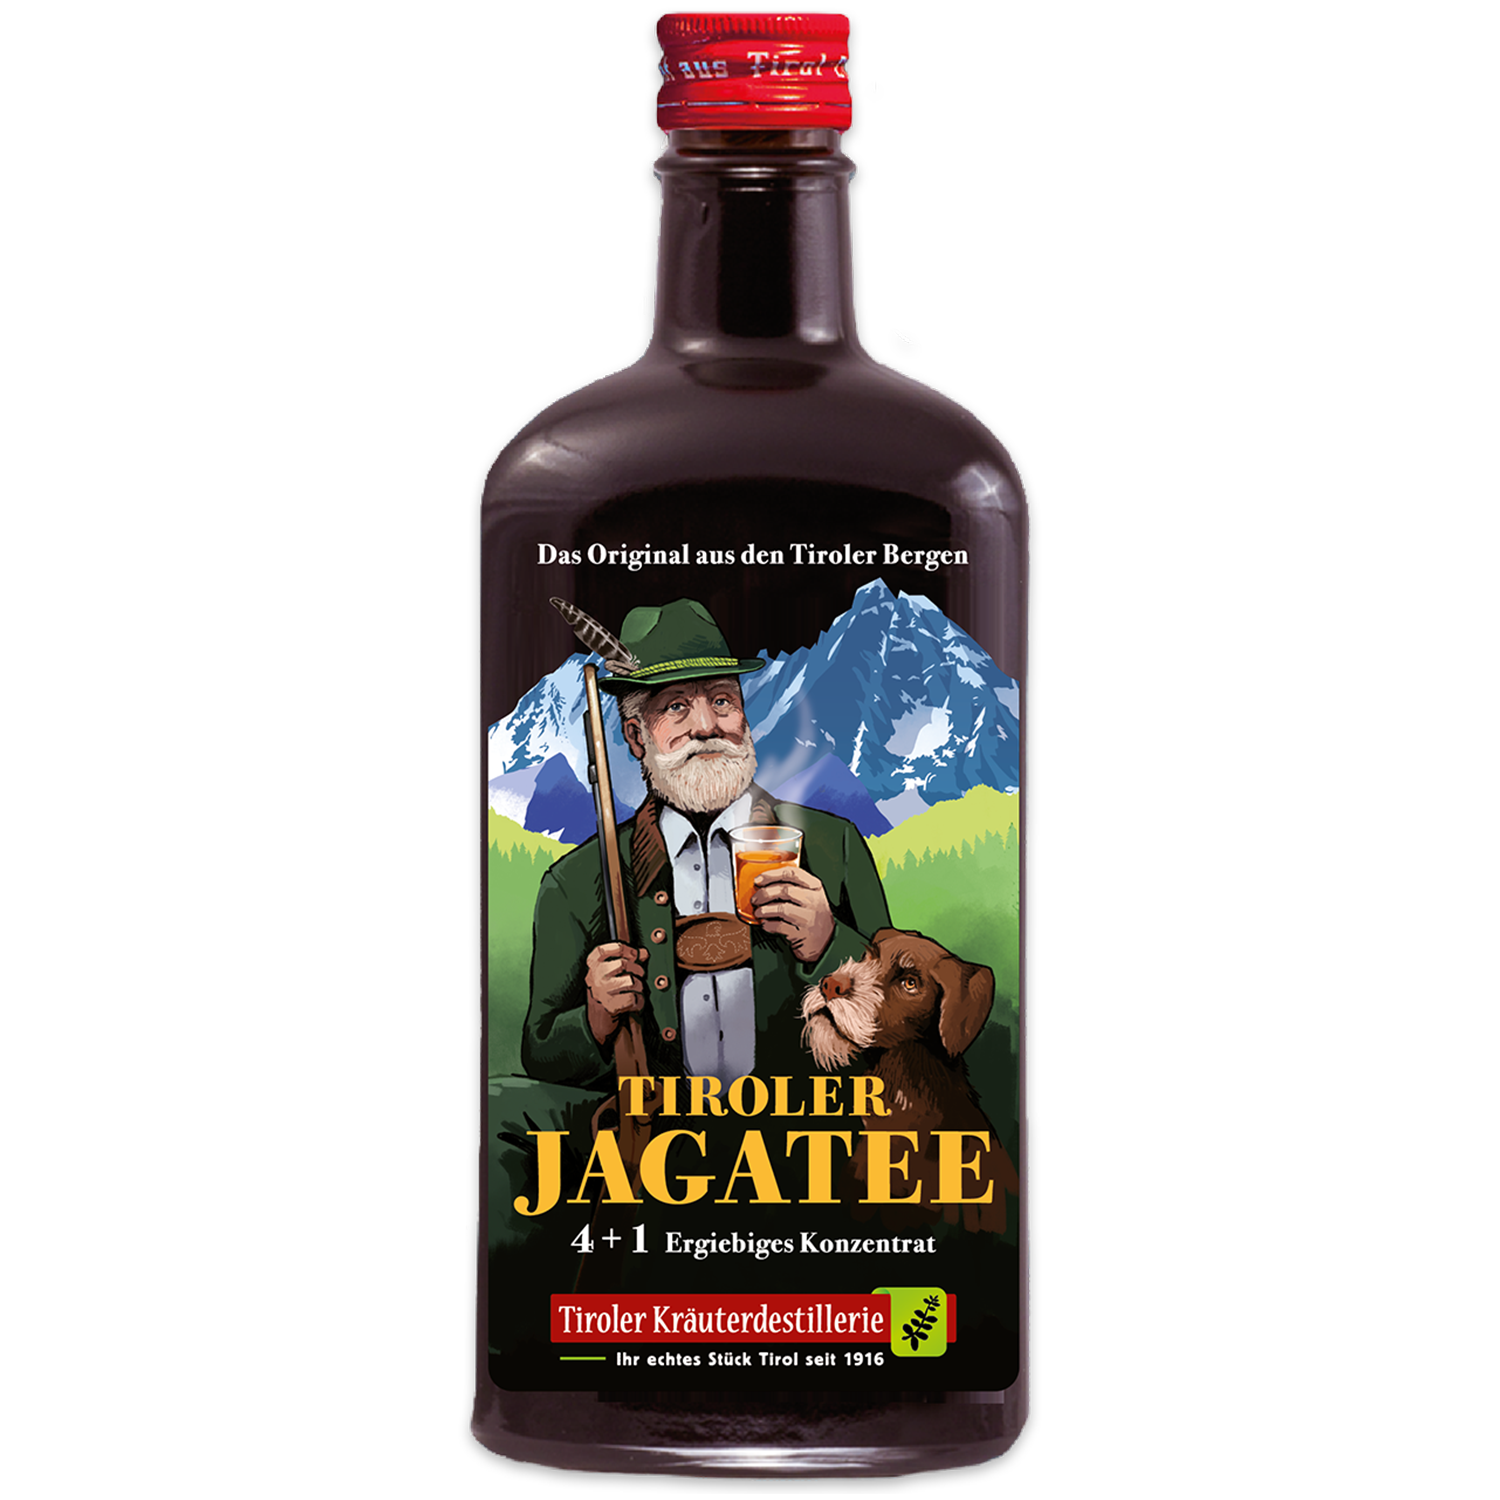 Gold award-winning Jagertea from the Tyrolean Herbal Distillery in a noble bottle